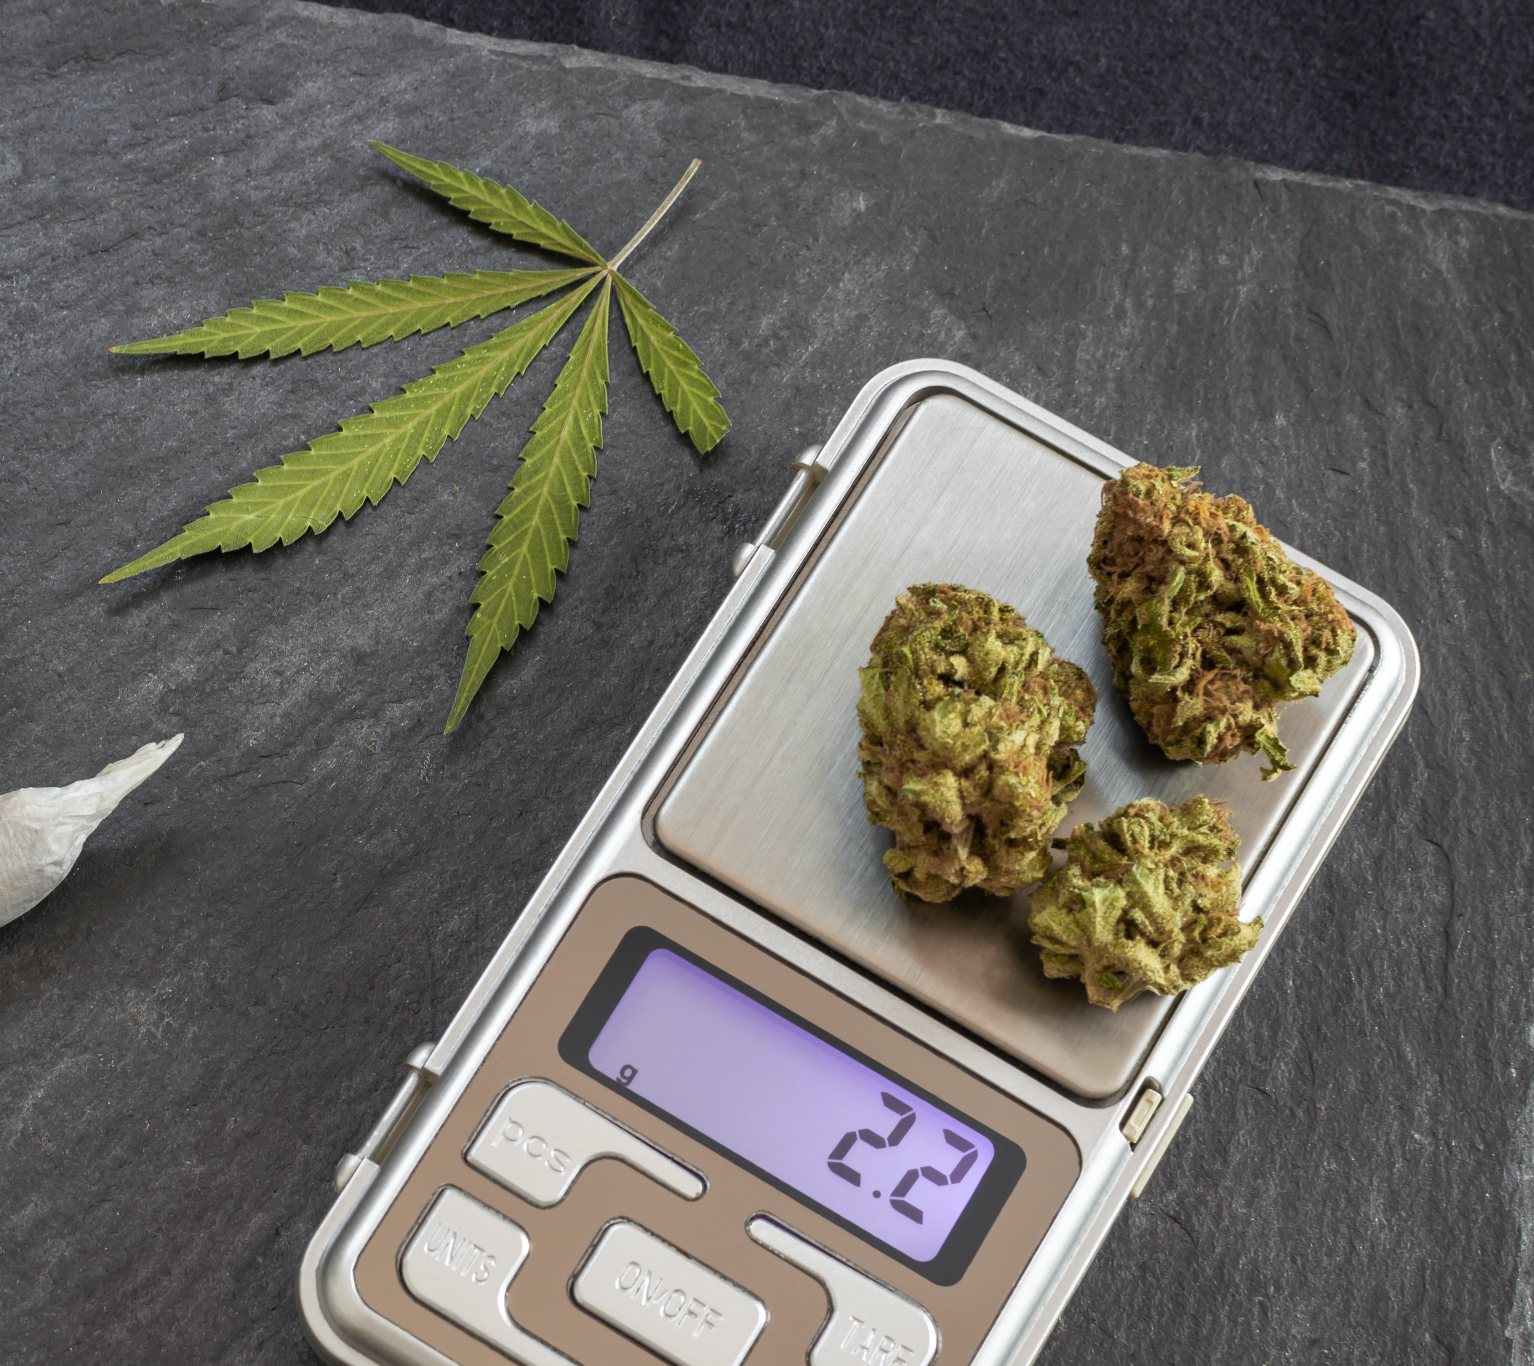 Understanding Cannabis Calculations